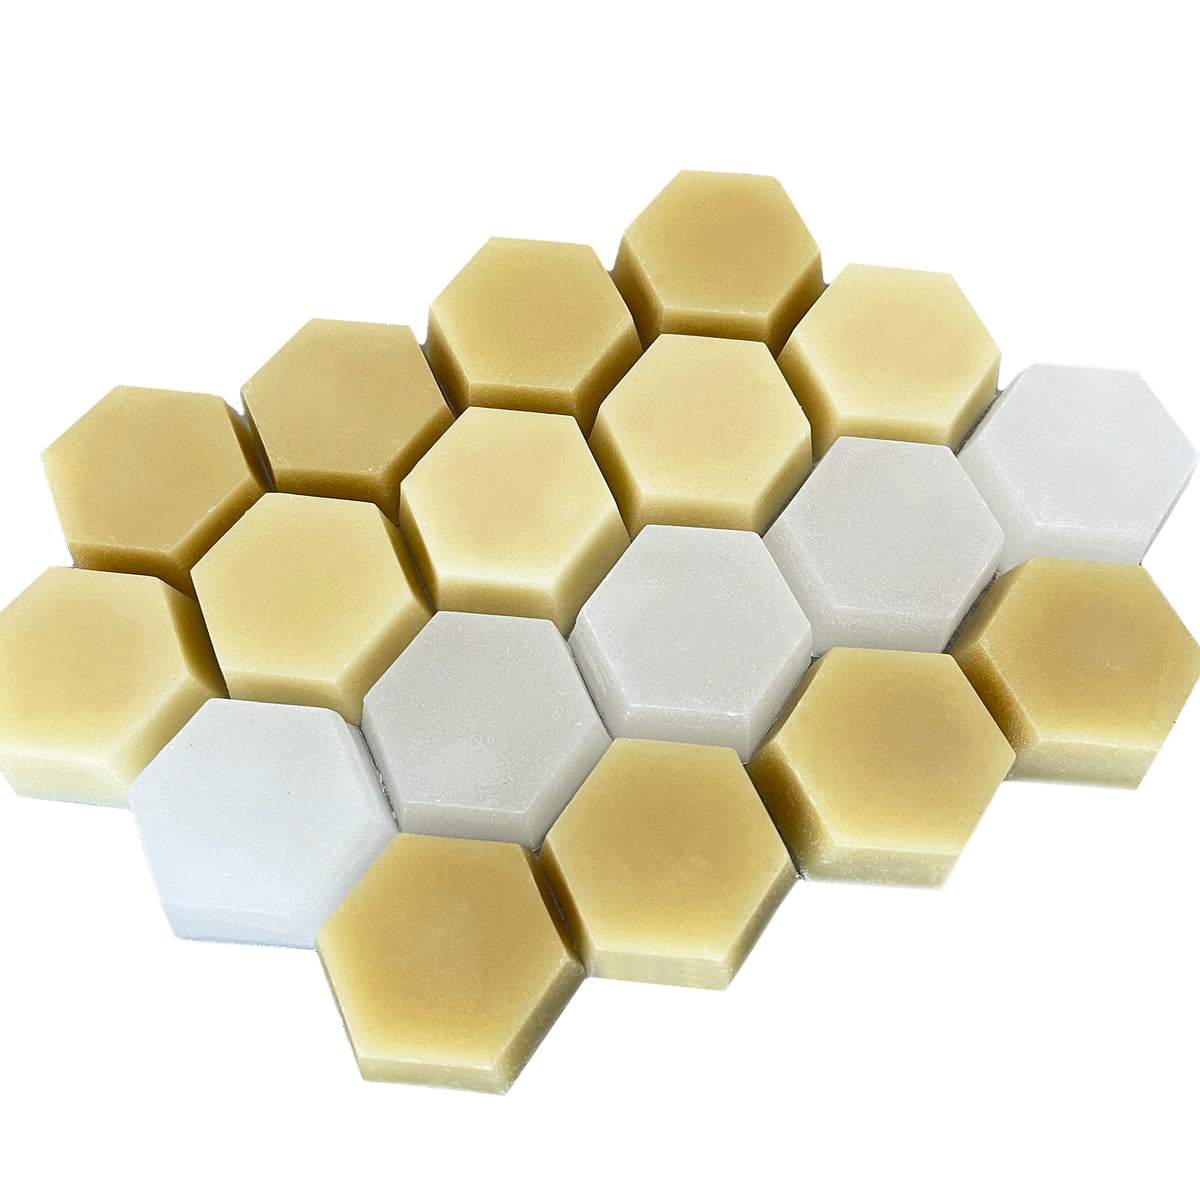 Bulk Paraffin Wax Blocks – The Bee Store